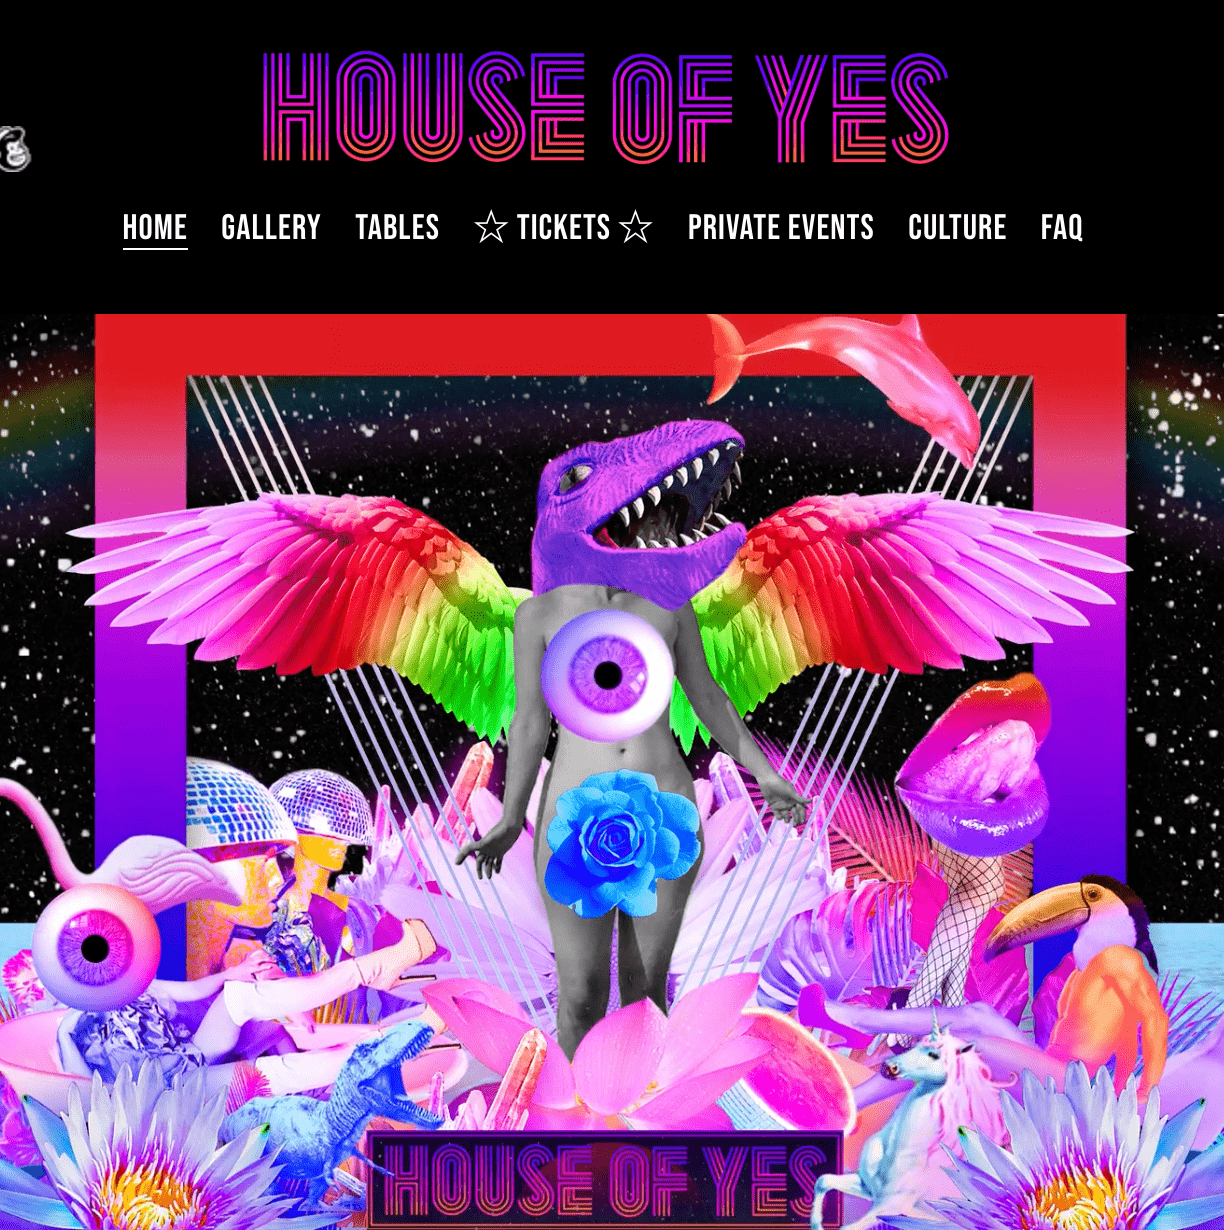 Screenshot of homepage of House of Yes website